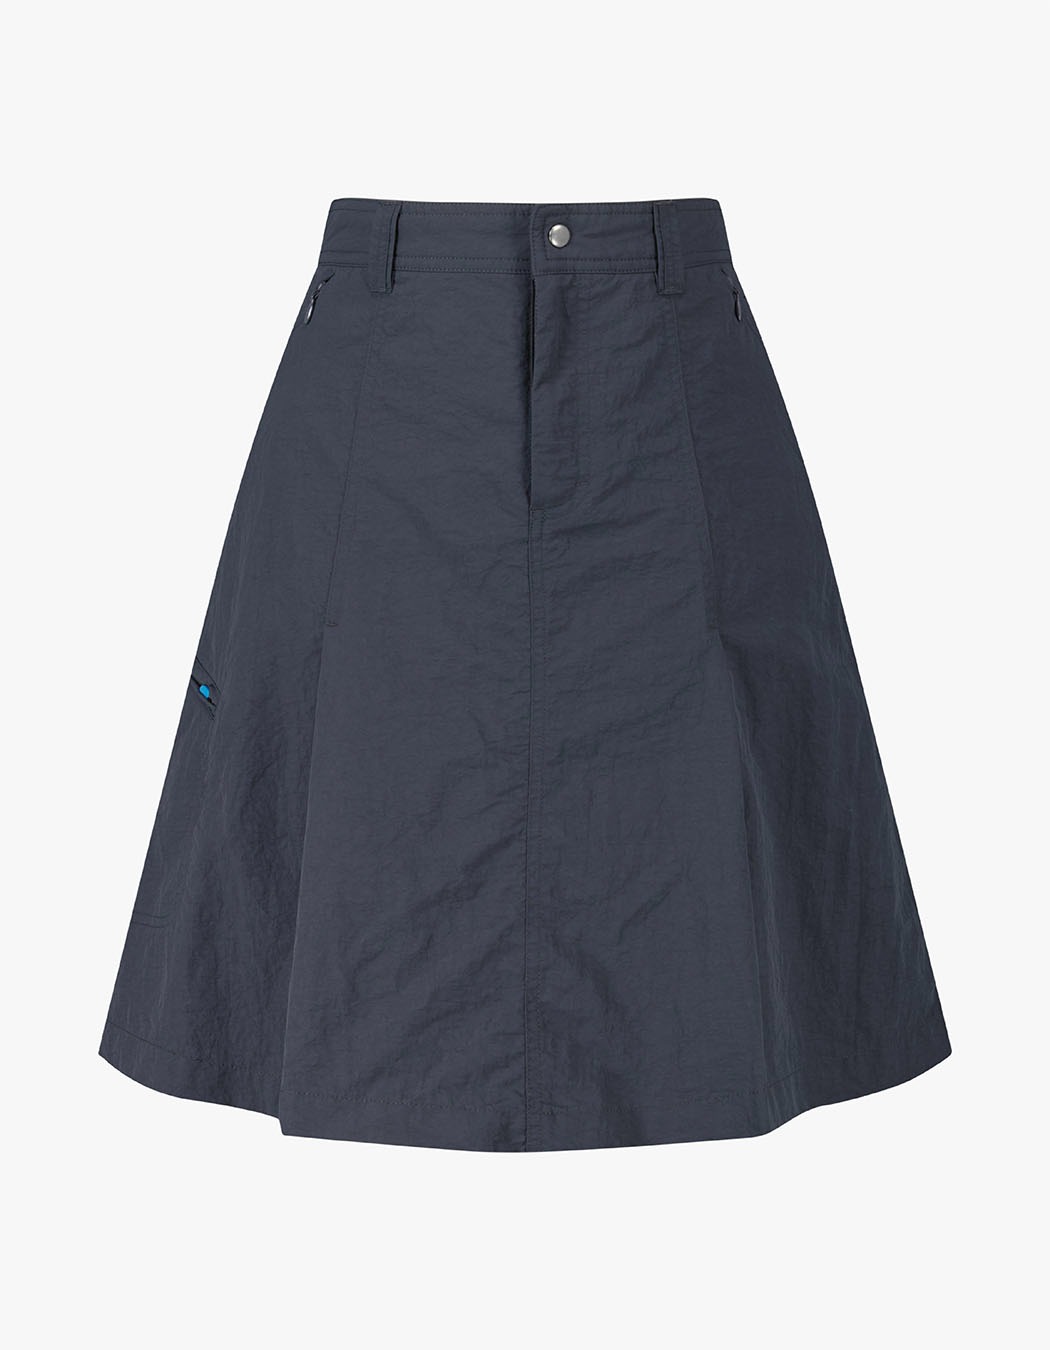 Nylon Zip Skirt - Charcoal